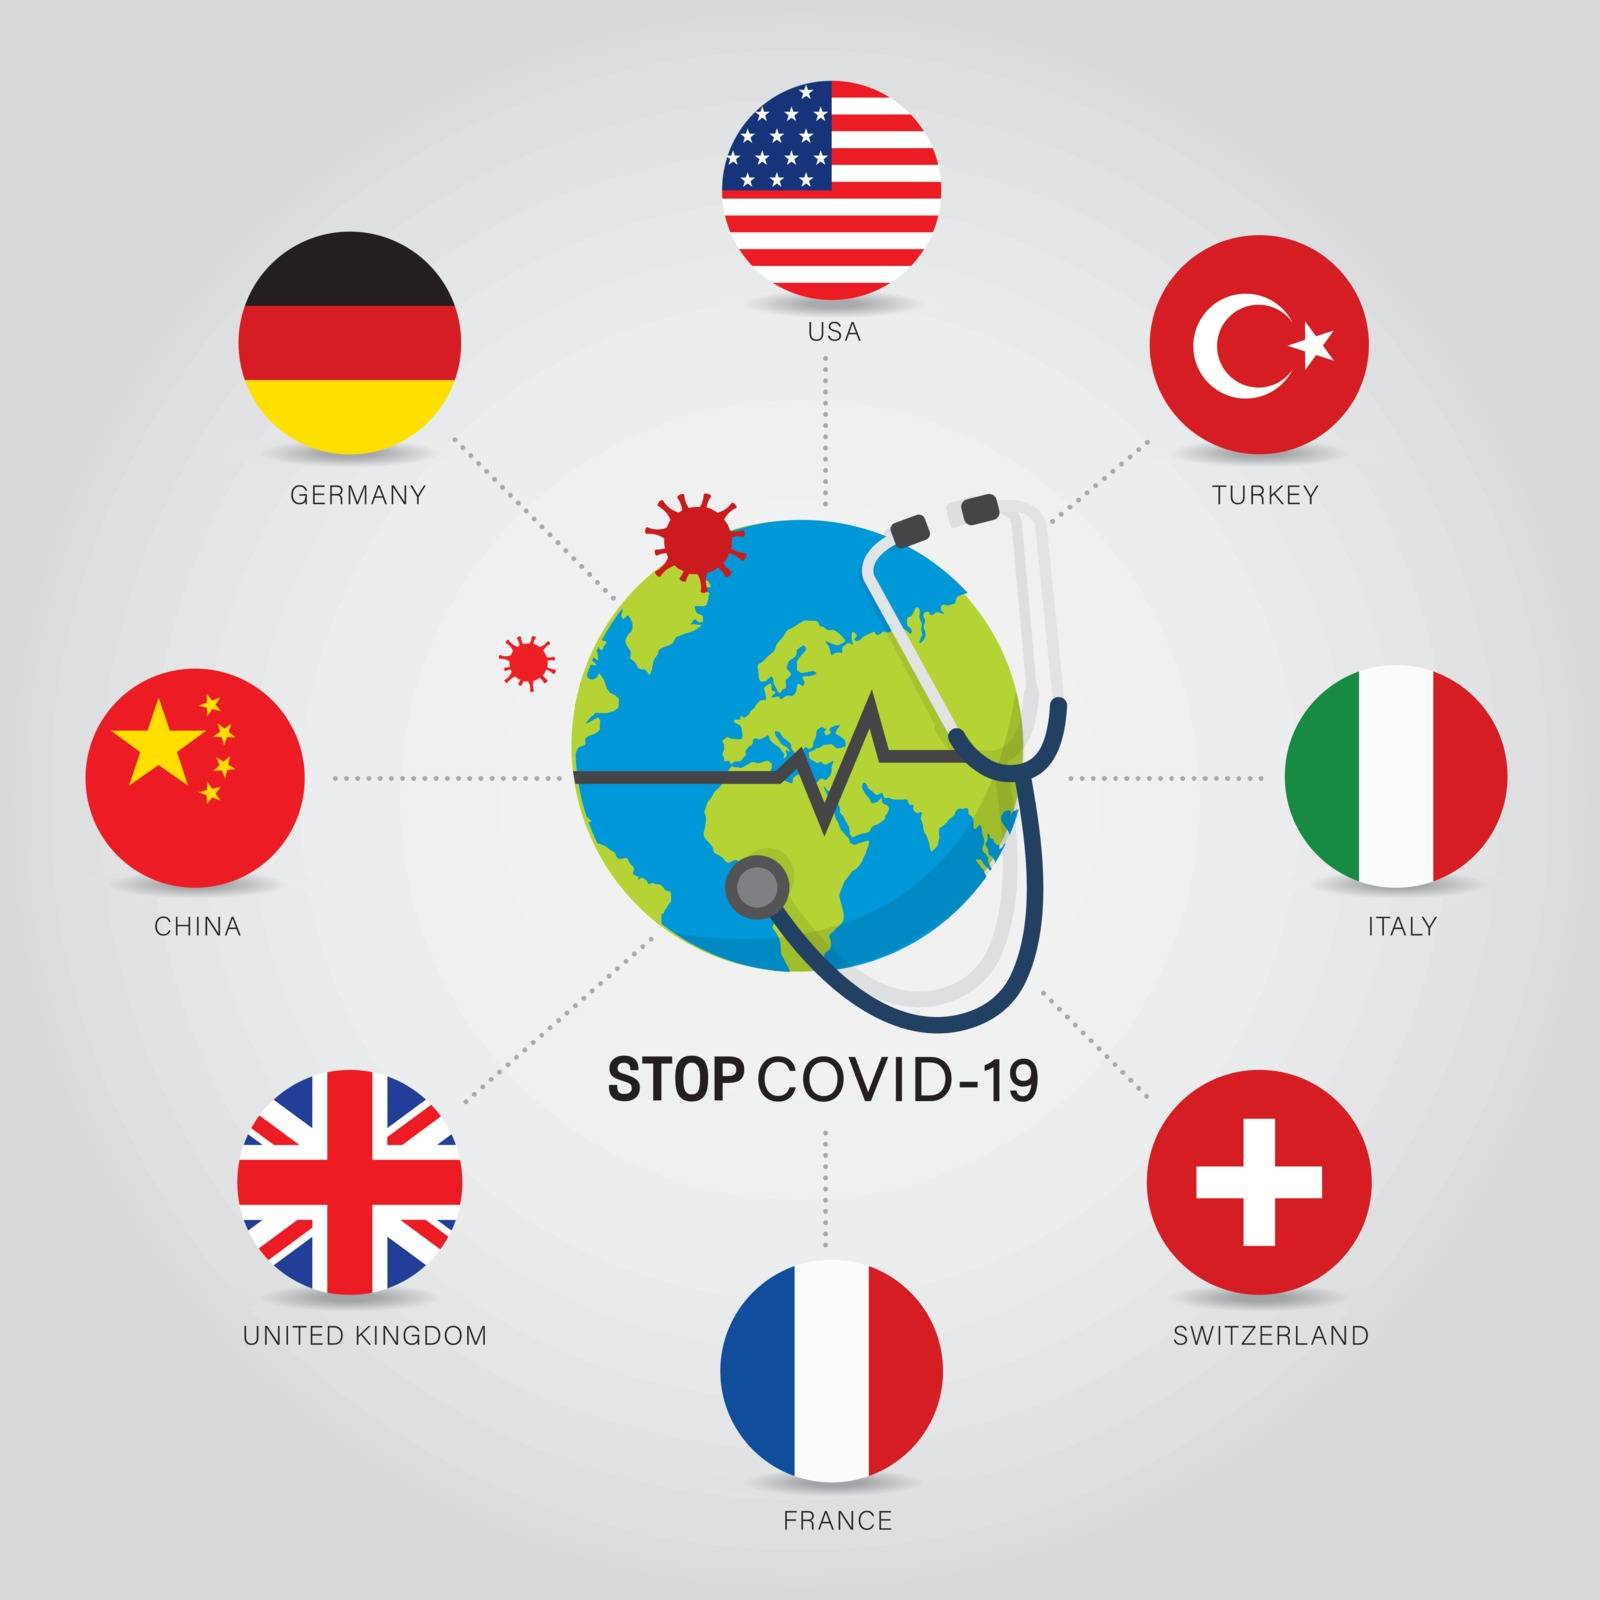 Coronavirus COVID-19 Flu spreading around the world. Stop Covid-19 Vector illustration.